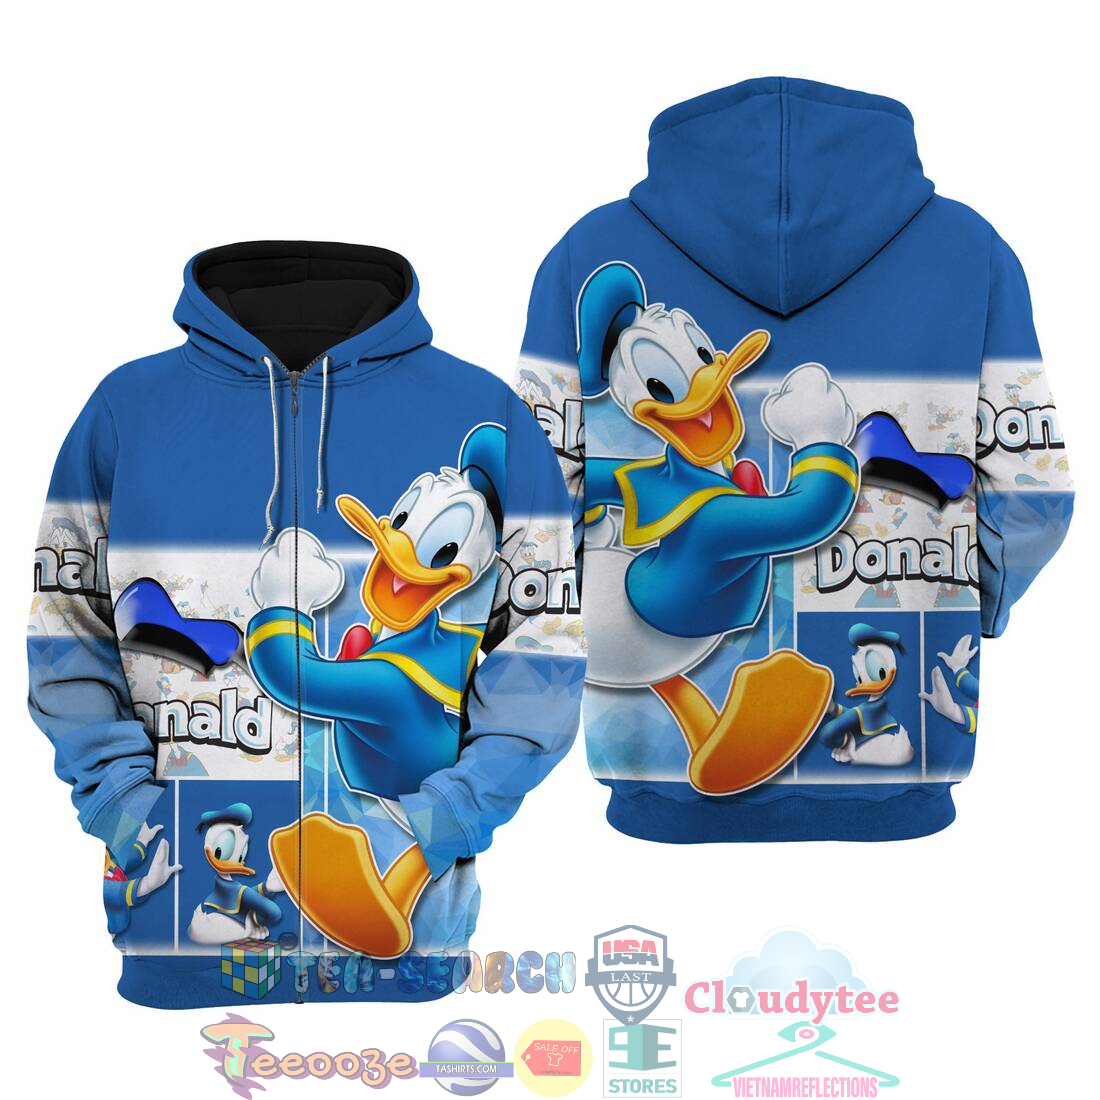 Qond90pN-TH170522-44xxxDonald-Duck-Disney-Hoodie-3d3.jpg